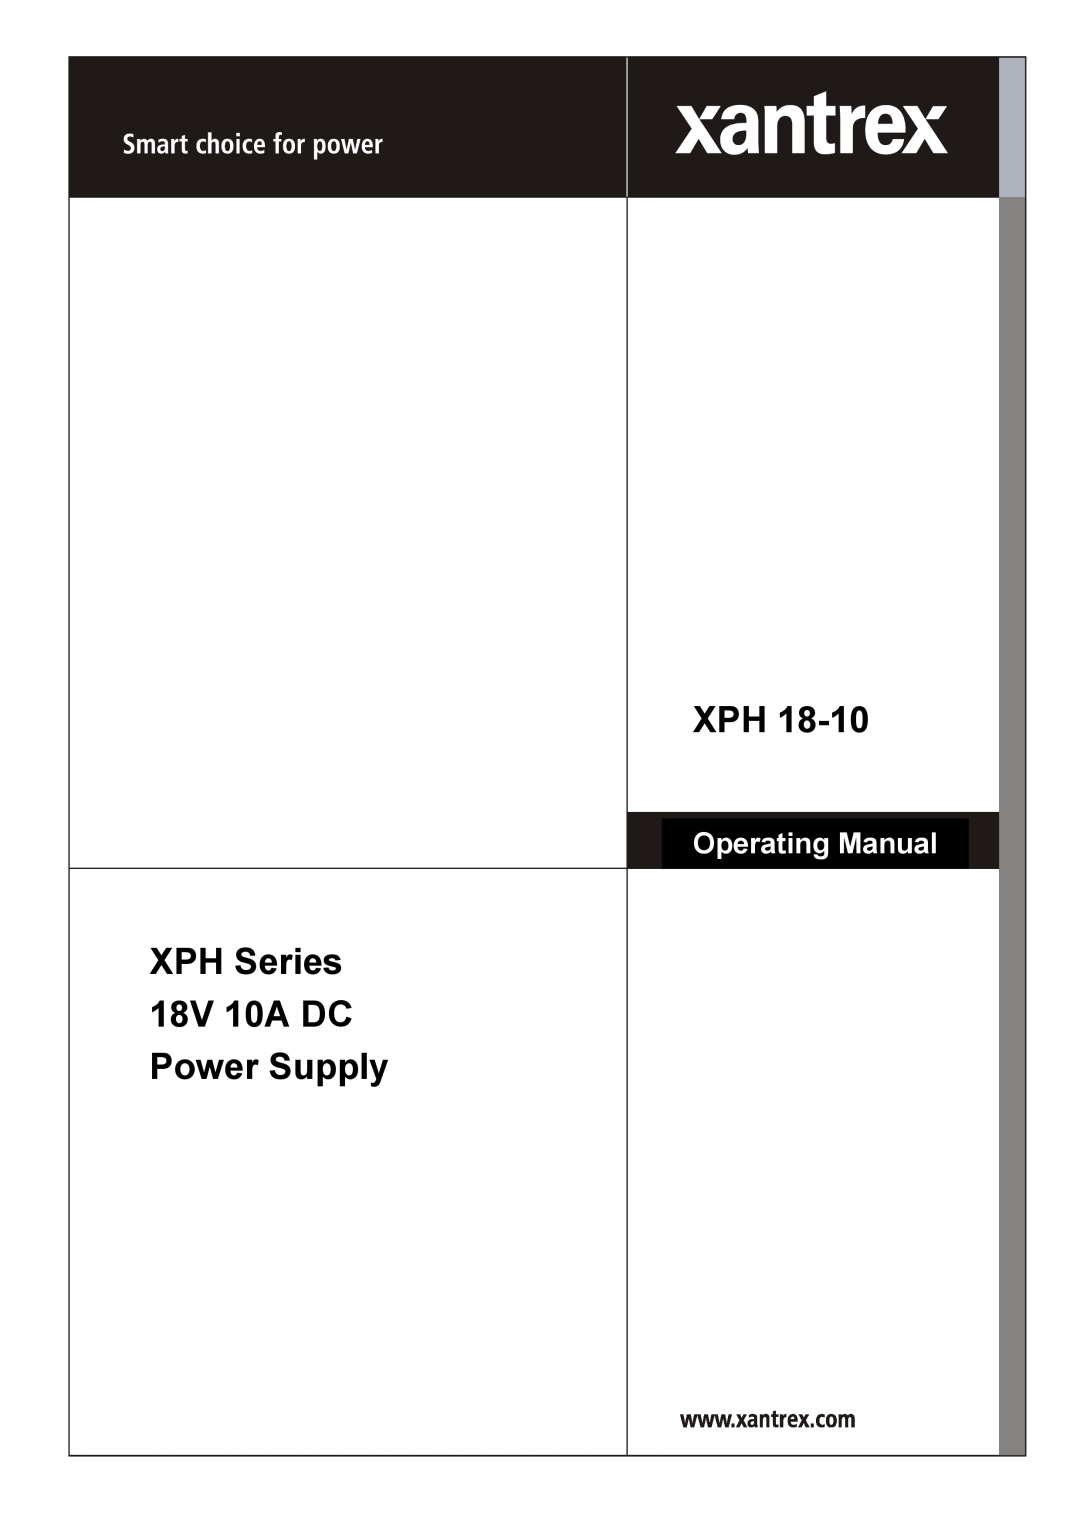 Xantrex Technology manual XPH Series 18V 10A DC Power Supply, Operating Manual 